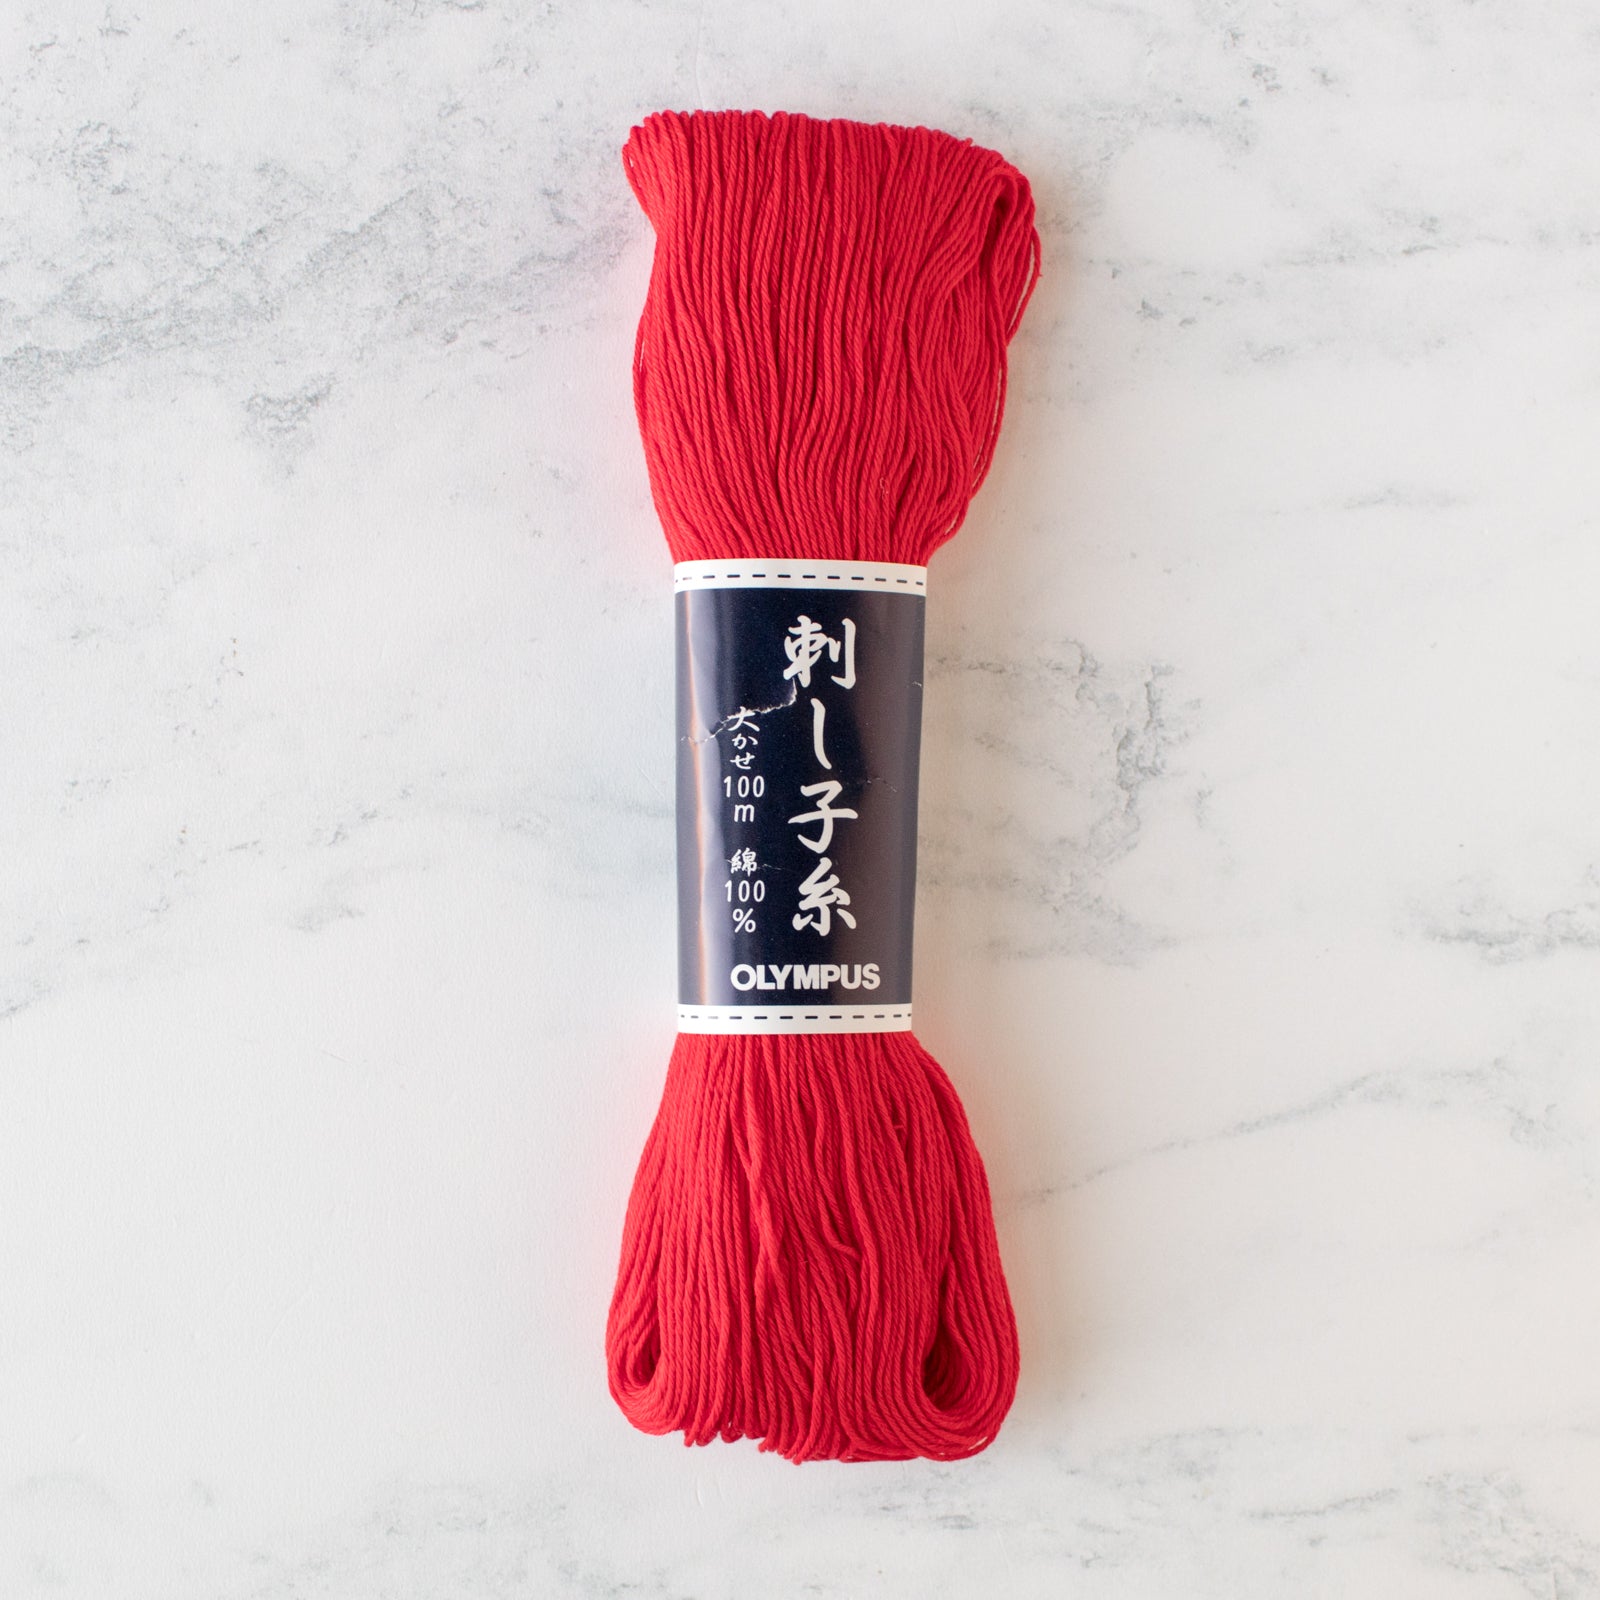 Sashiko Thread Cranberry Red - A Threaded Needle